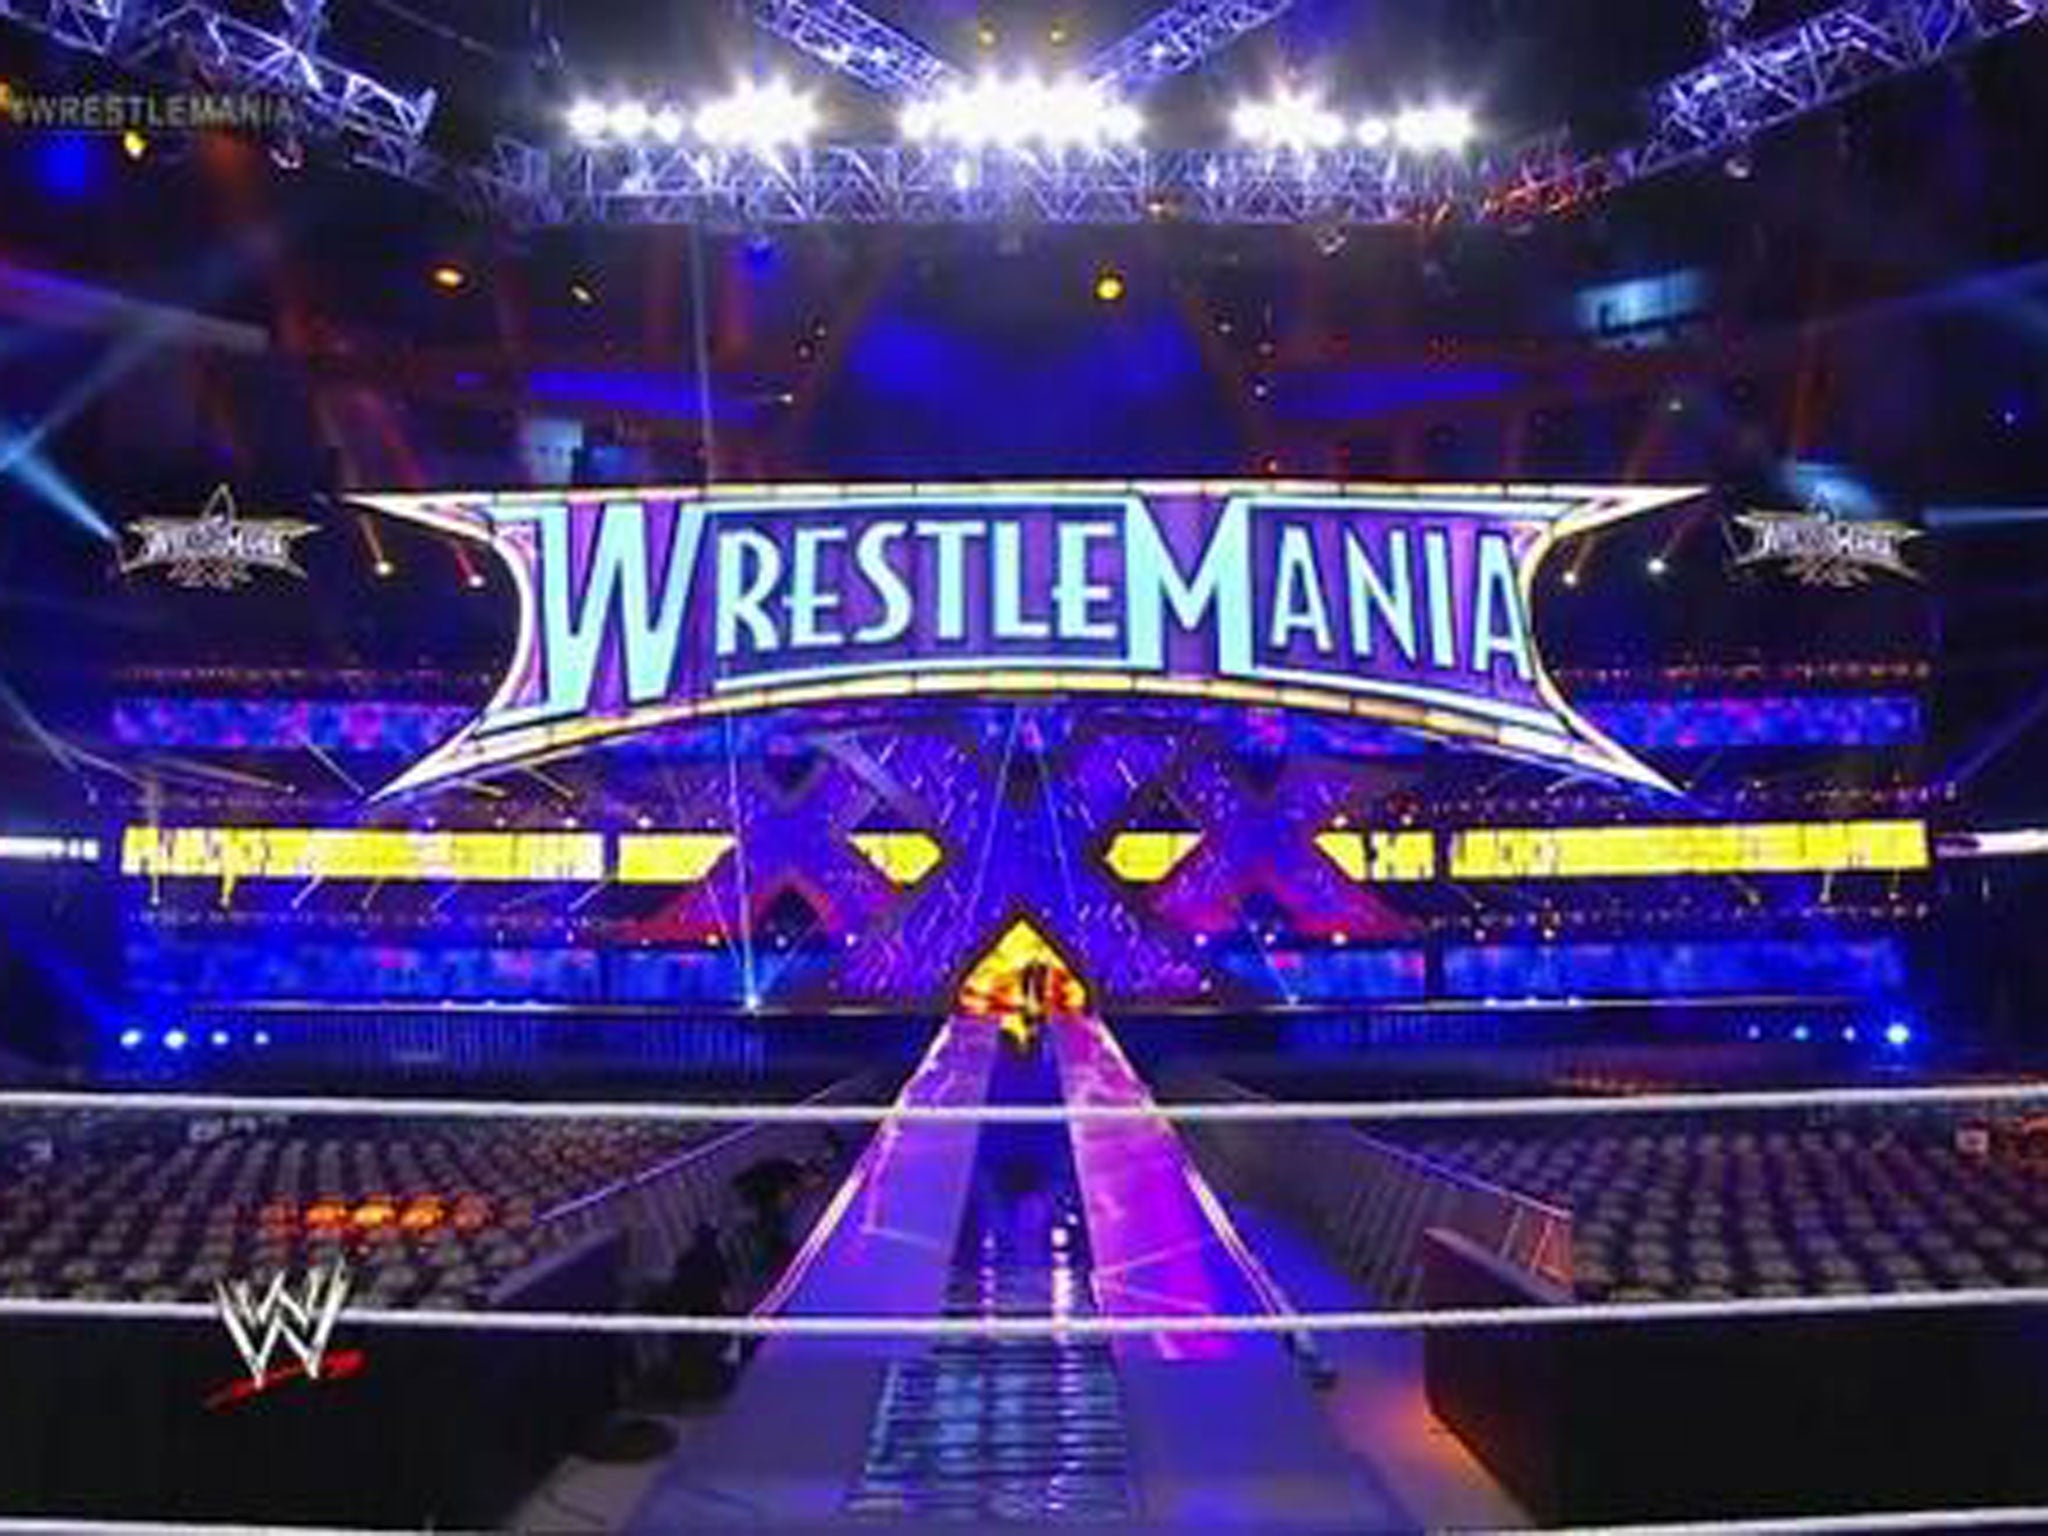 Who will shine at WrestleMania 30?